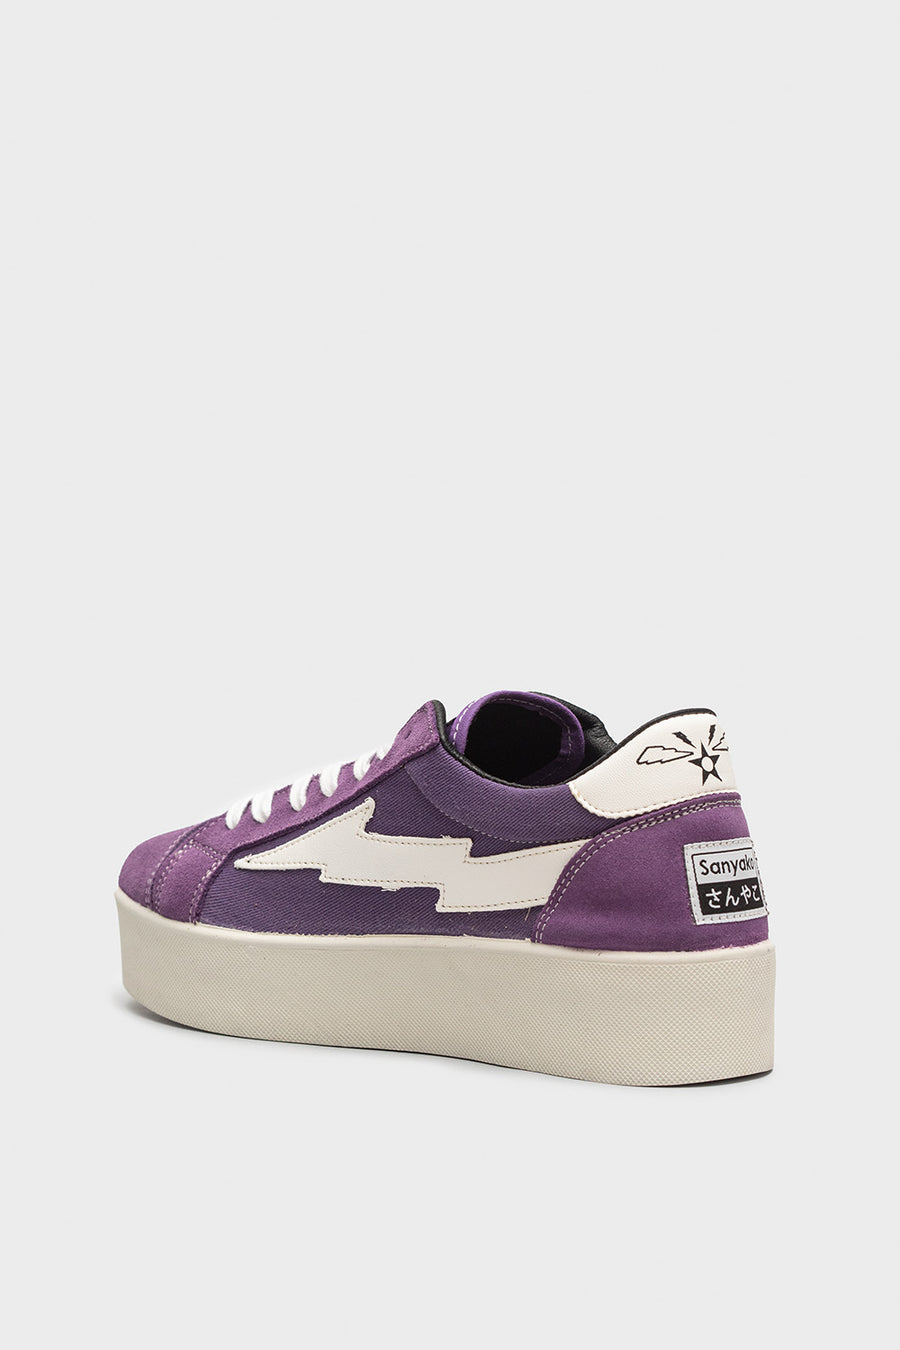 Sneakers Sanyako in tessuto viola e bianco thuw032